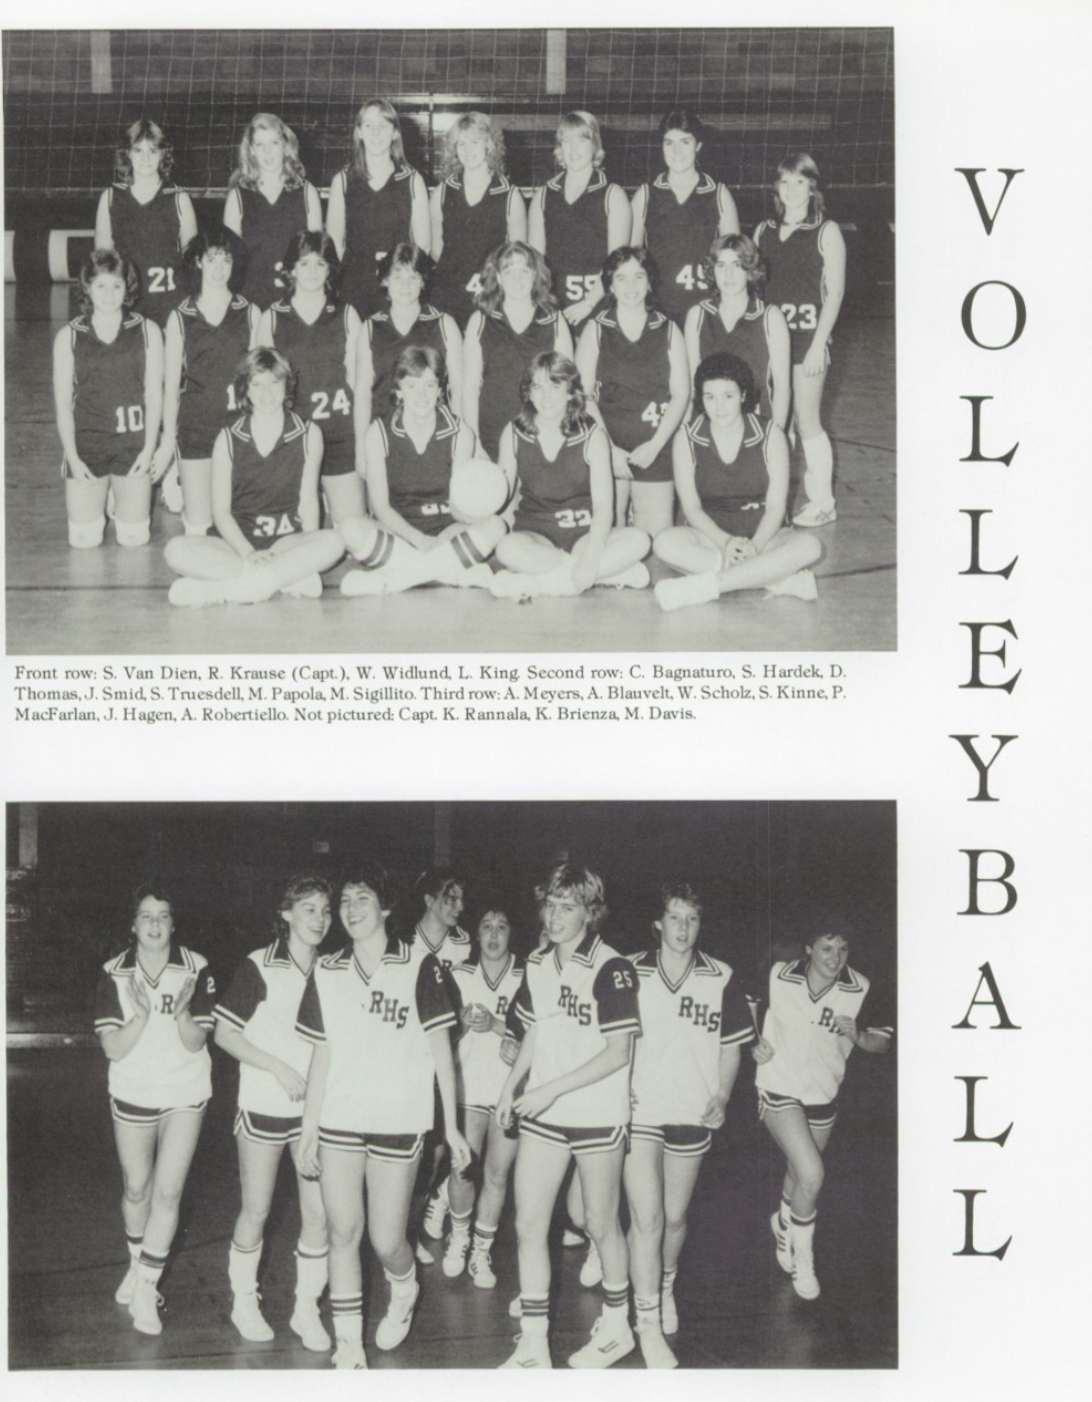 1984 Girls’ Volleyball Team